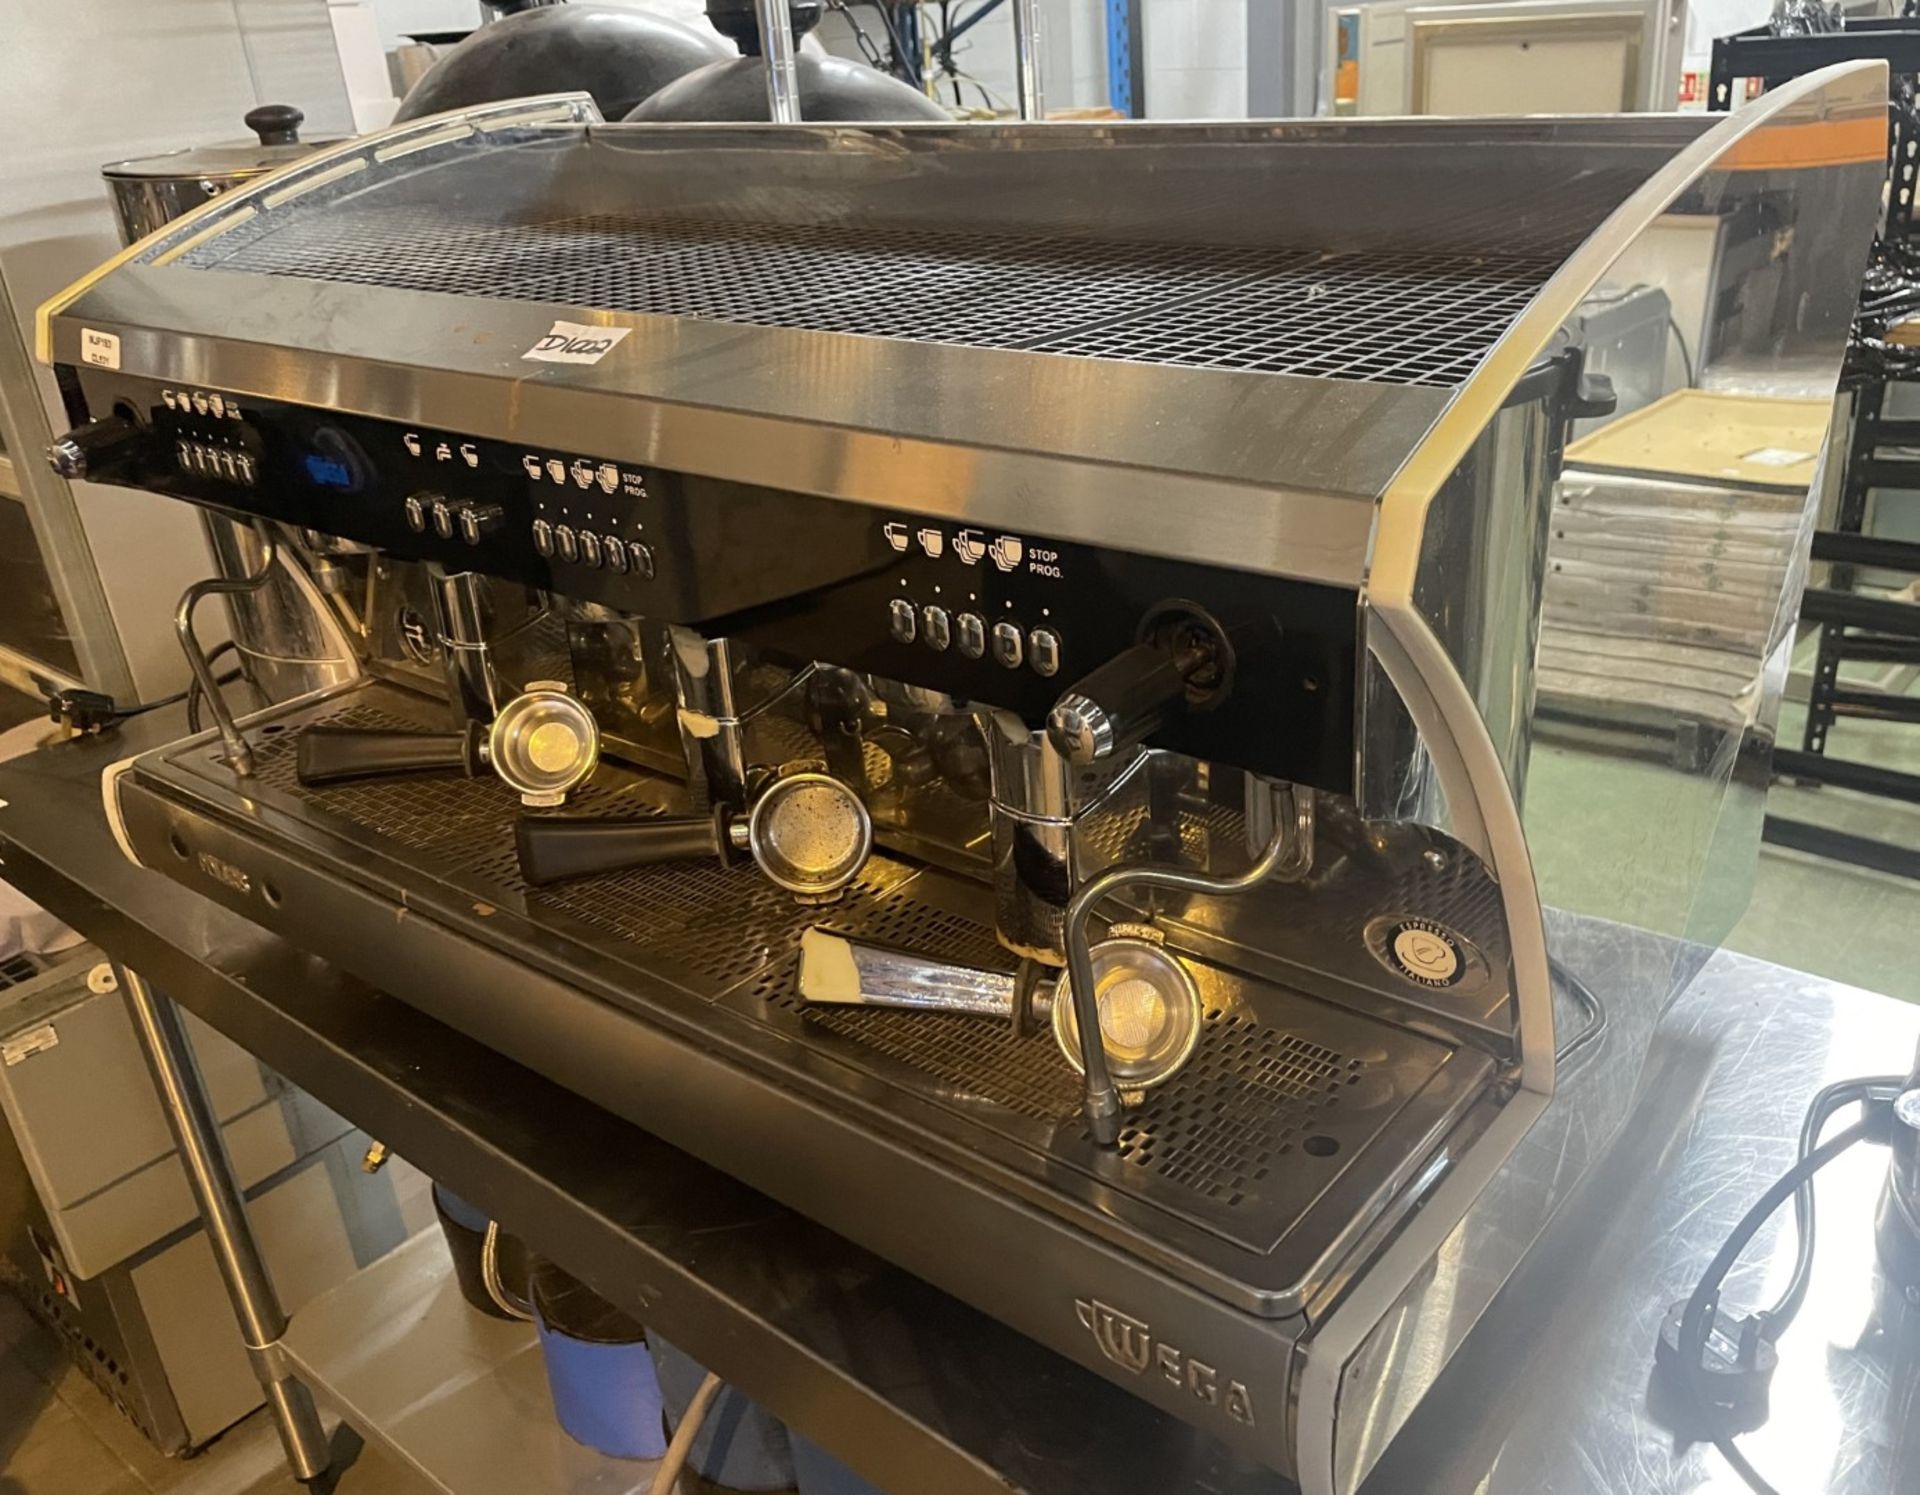 1 x Polaris Wega 3 Group Commercial Espresso Coffee Machine - Stainless Steel / Black Exterior - 3 P - Image 5 of 9